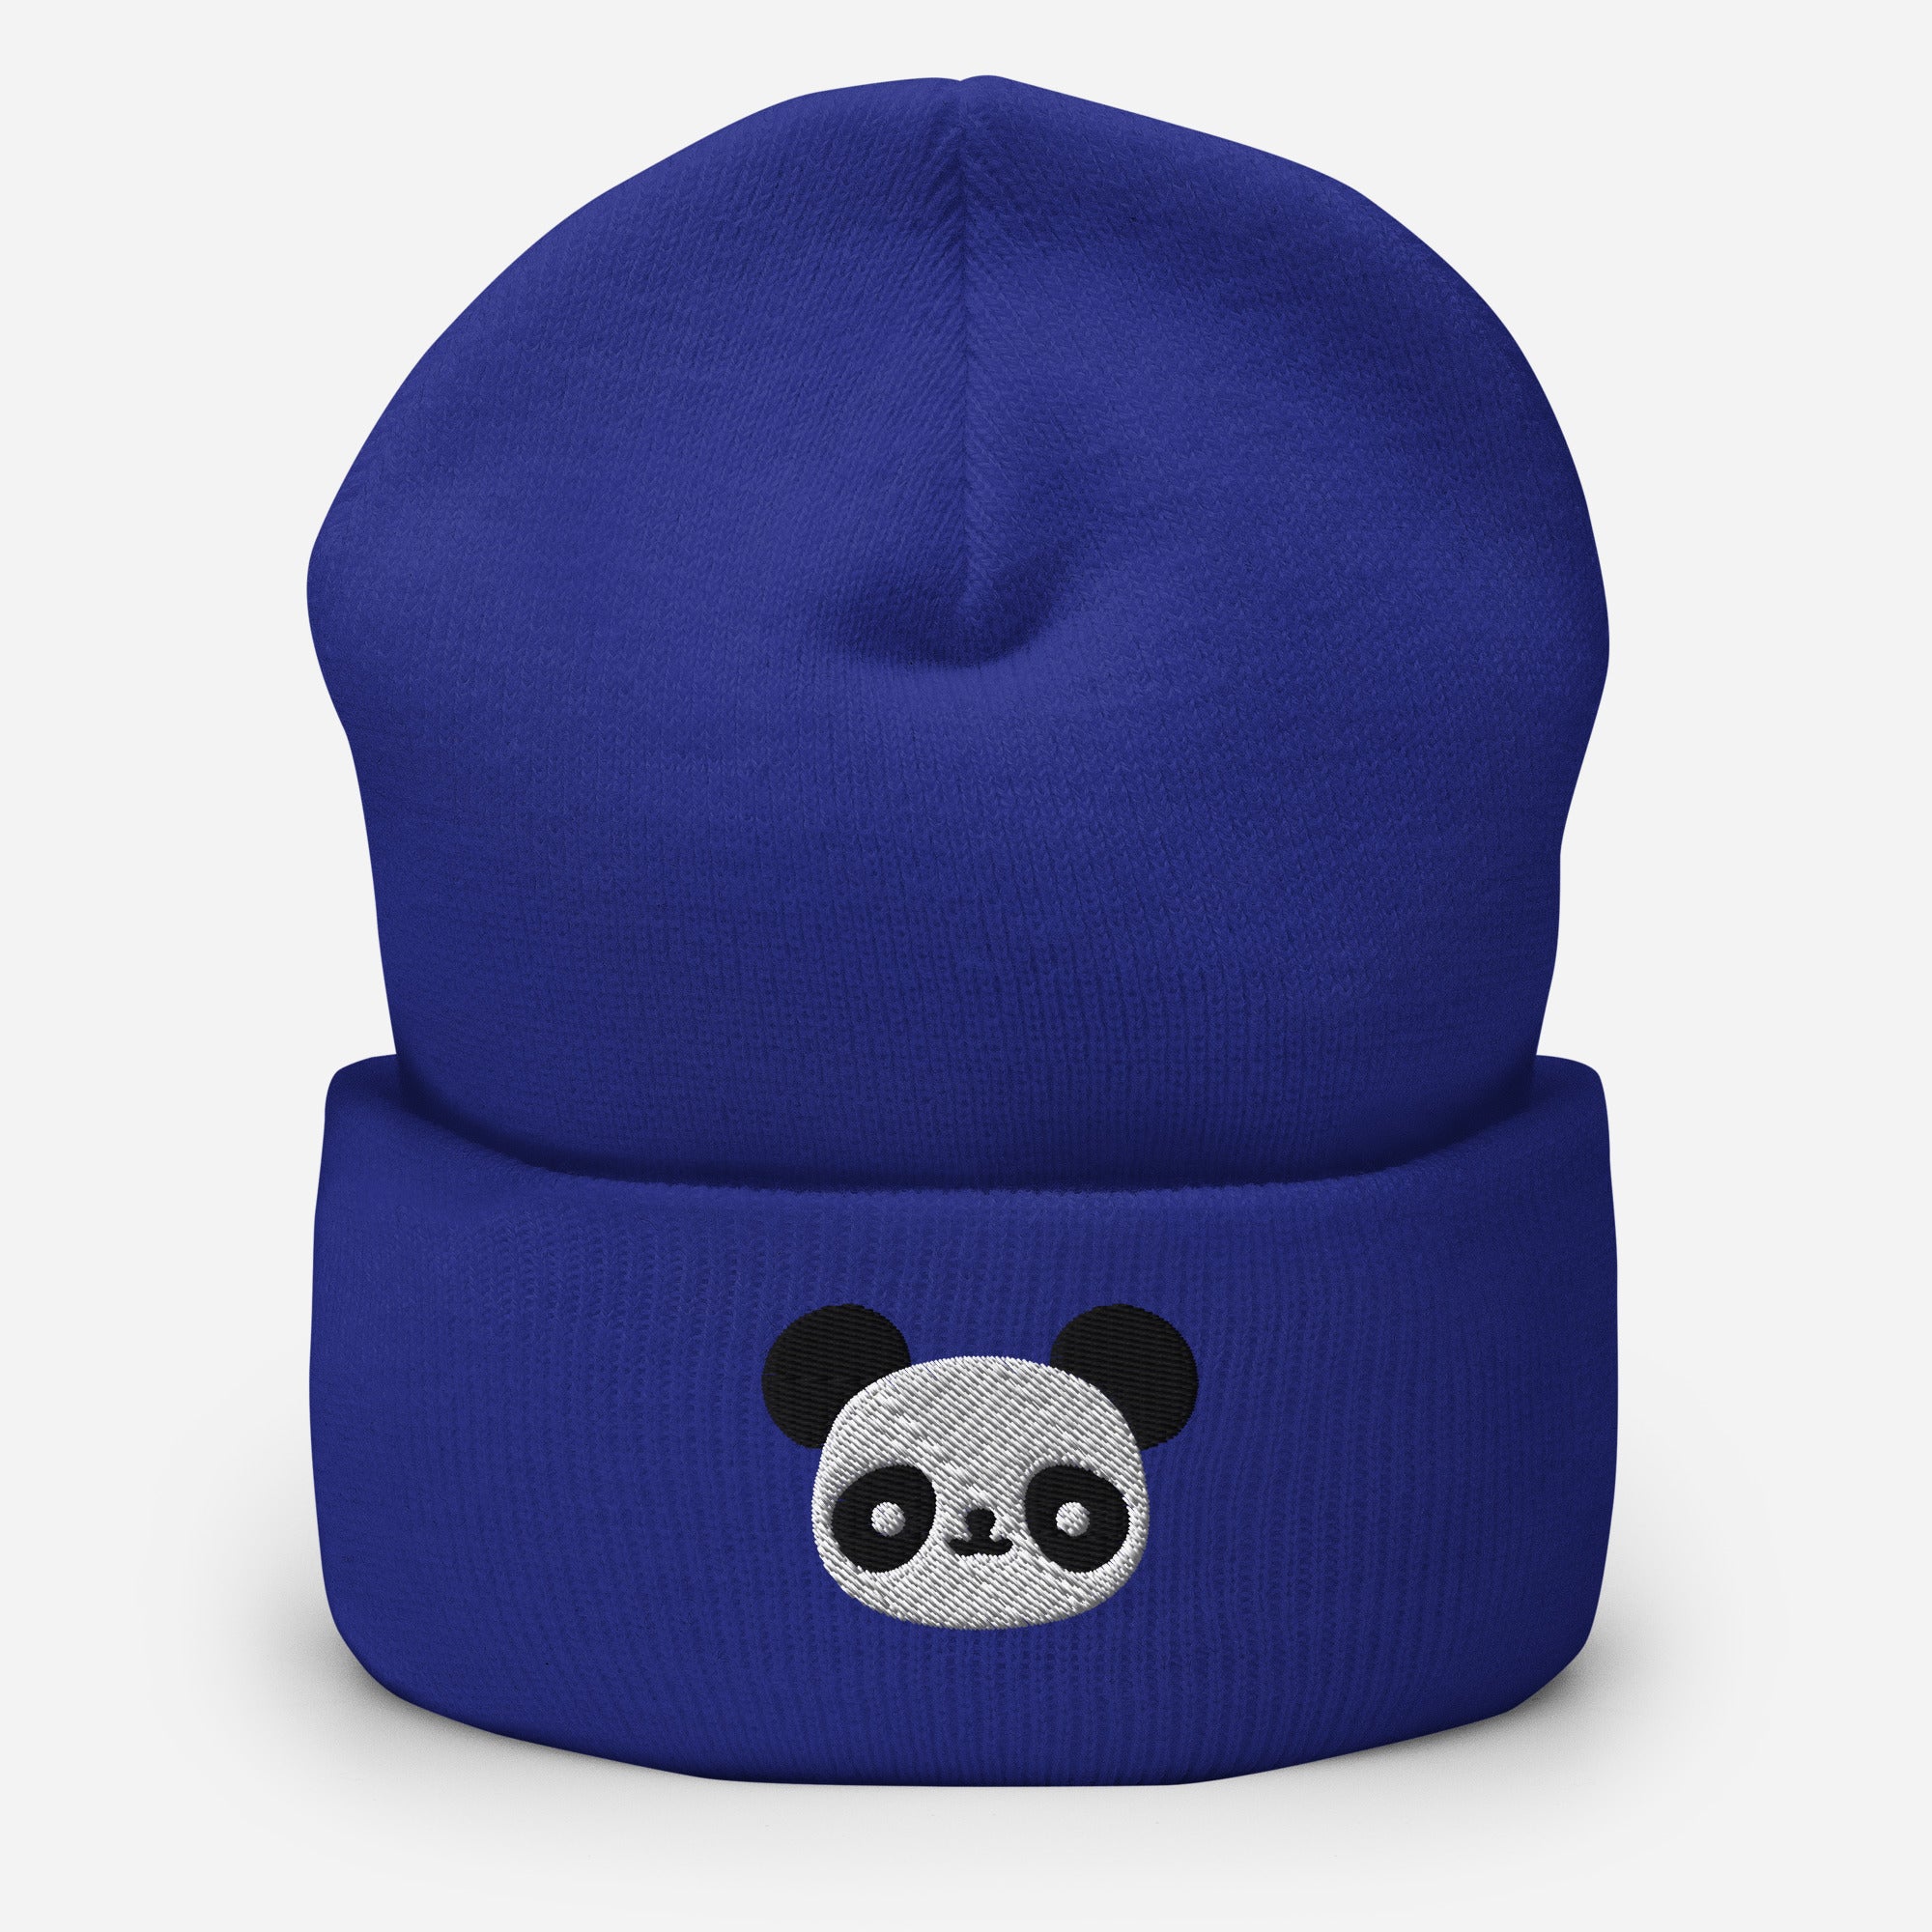 Baby Panda Beanie Cap, Embroidered Wild Animal Cuffed Beanie, Handmade Unisex Slouchy Cartoon Panda Bear Gift Hat Cap